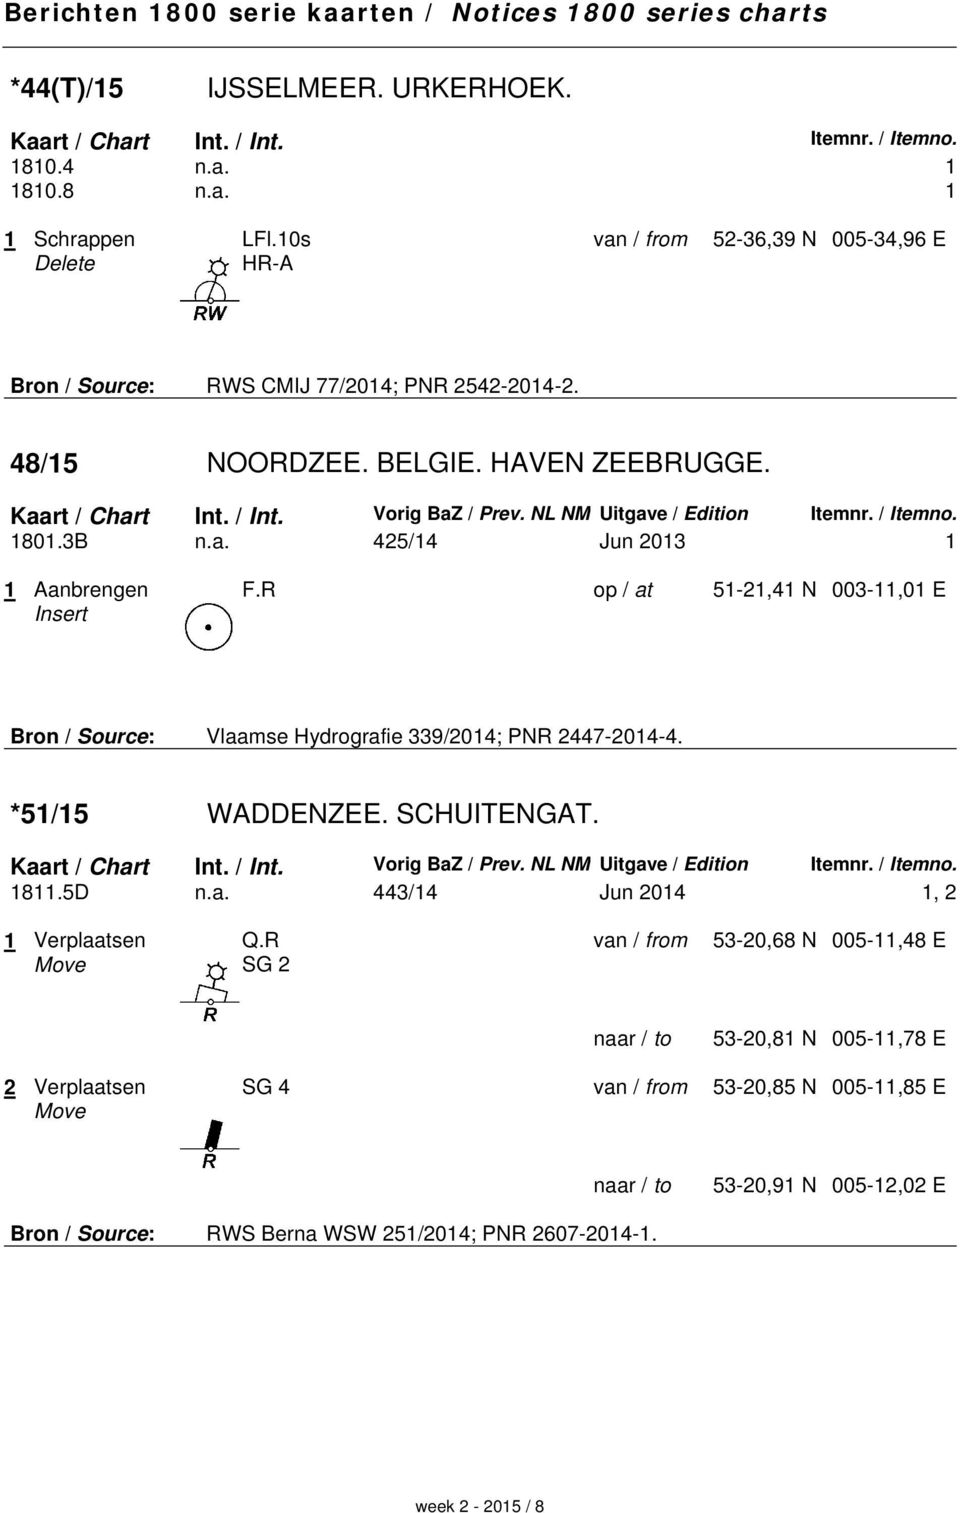 NL NM Uitgave / Edition Itemnr. / Itemno. 1801.3B n.a. 425/14 Jun 2013 1 1 Aanbrengen Insert F.R op / at 51-21,41 N 003-11,01 E Bron / Source: Vlaamse Hydrografie 339/2014; PNR 2447-2014-4.